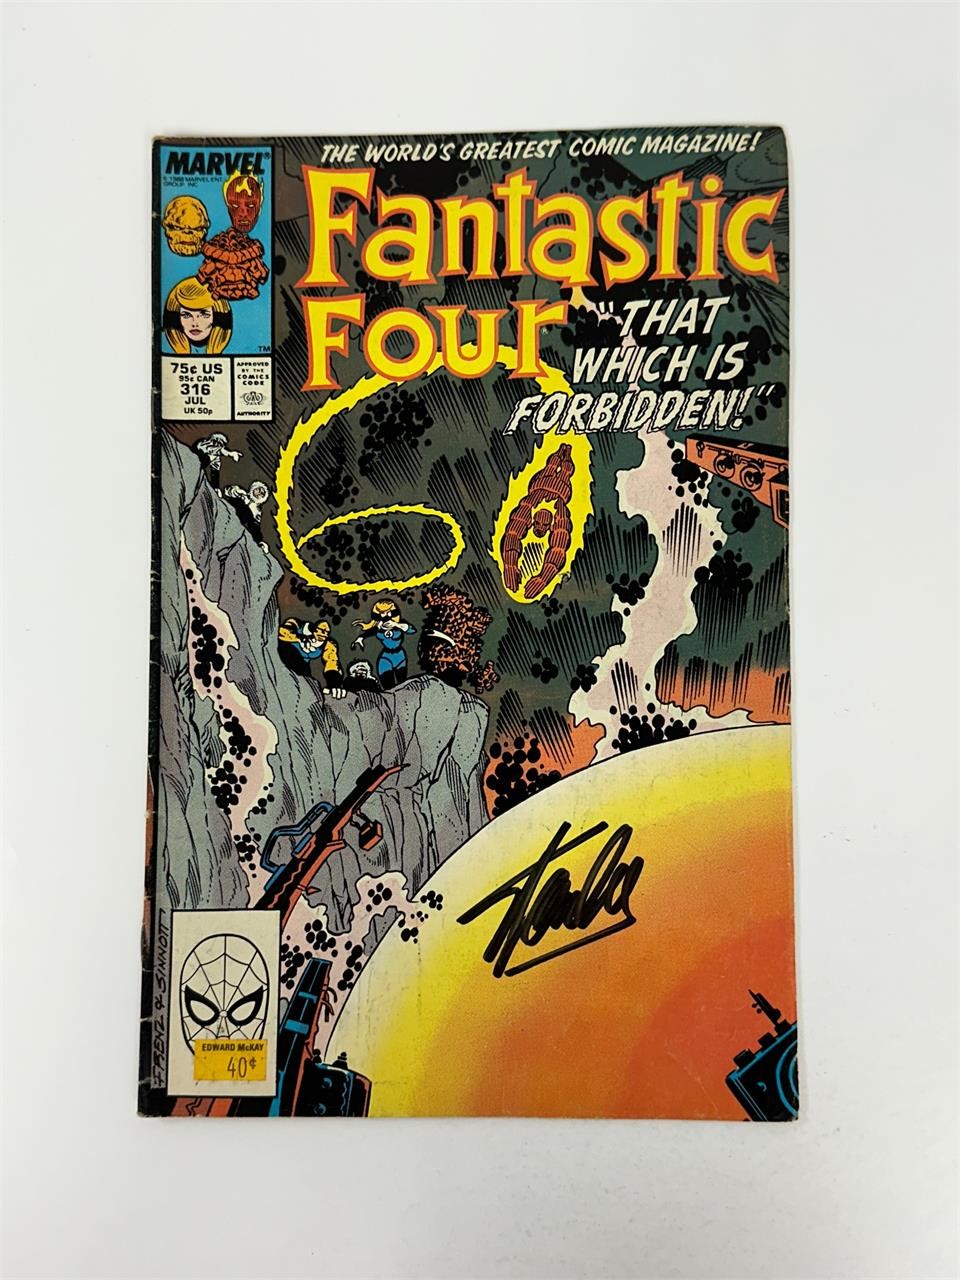 Autograph Signed COA MARVEL DC Vintage Comics V